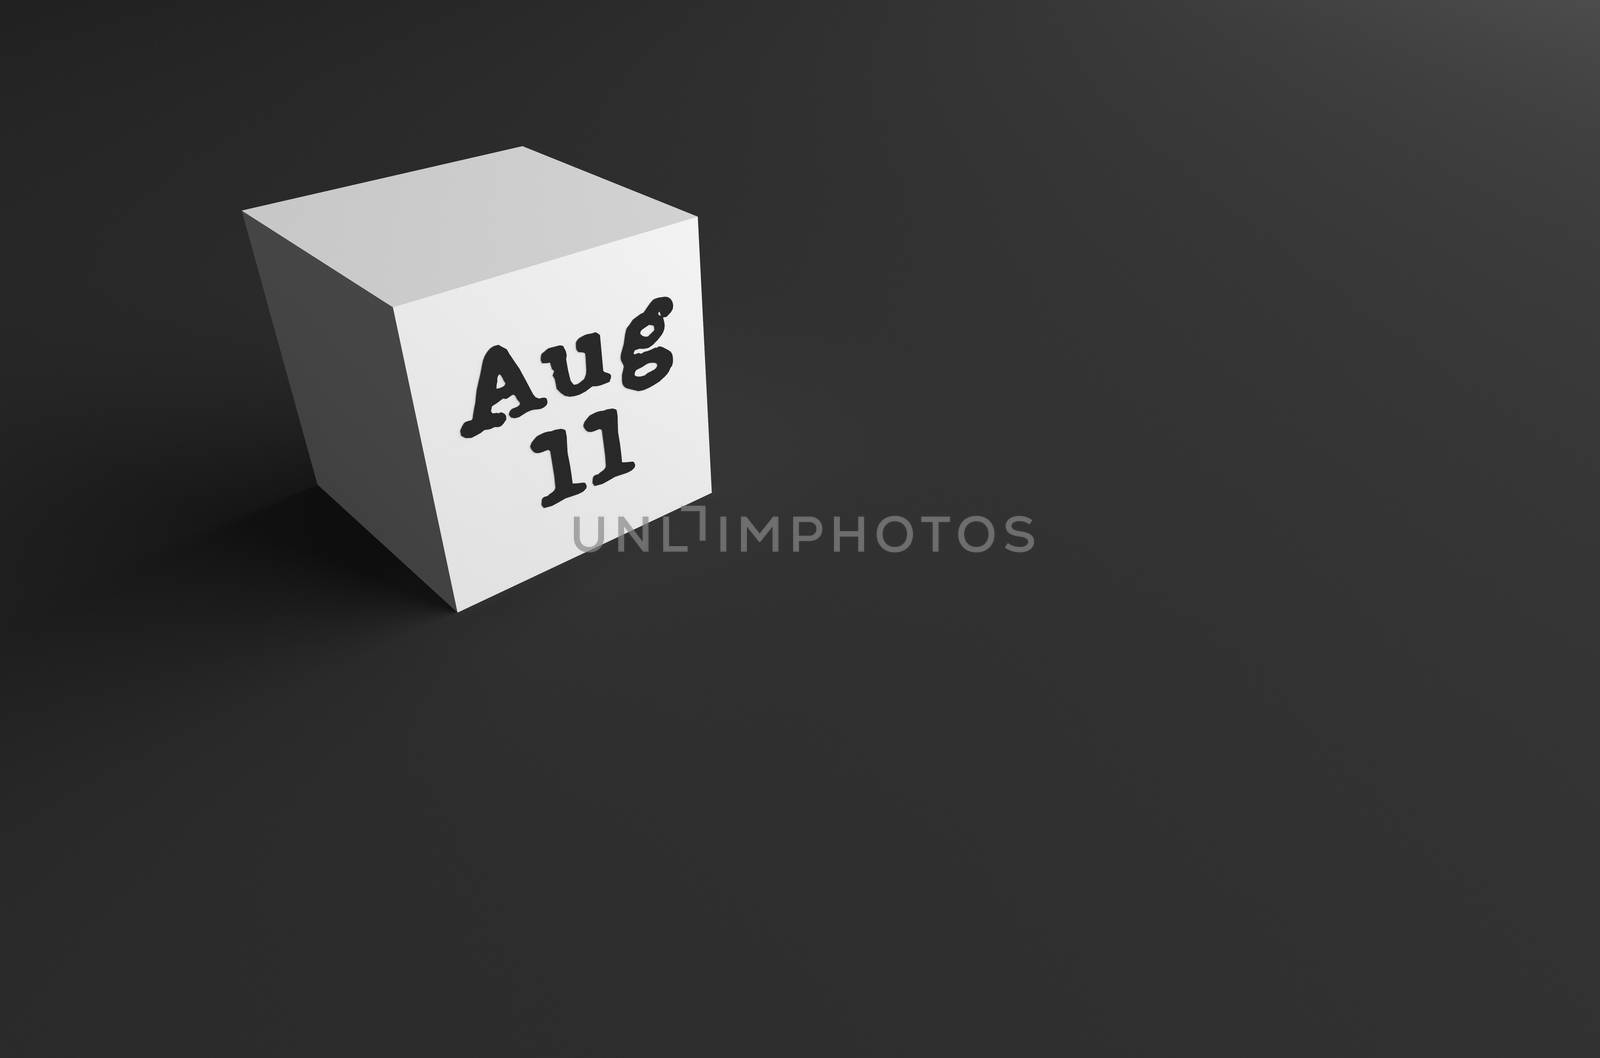 3D RENDERING OF Aug 11 by PrettyTG